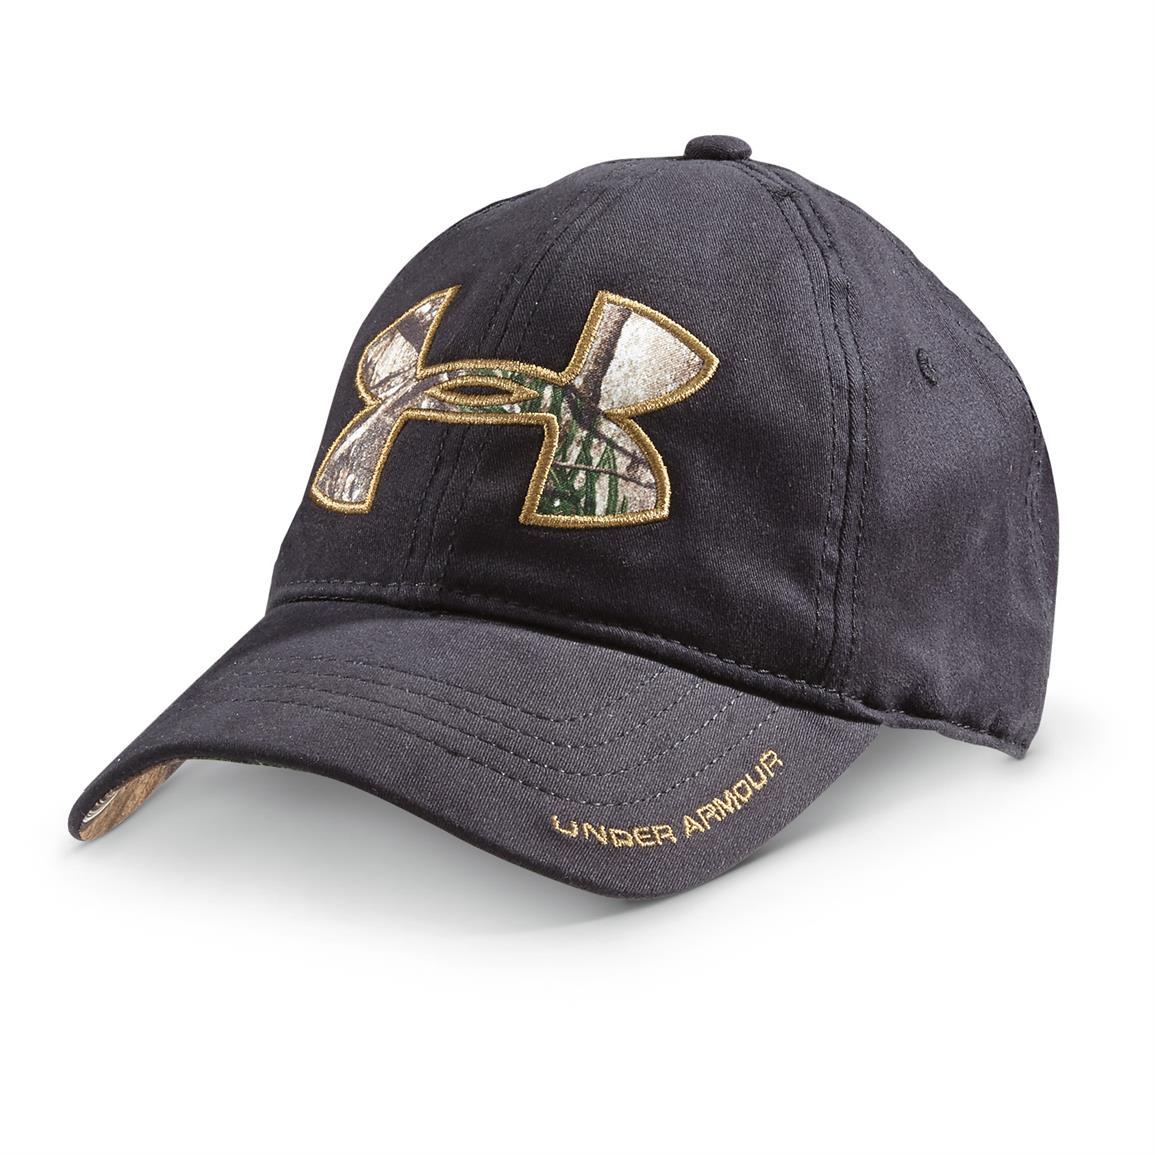 Digital Camo Under Armour Logo - Under Armour Caliber Cap - Hats & Caps at Sportsman's Guide